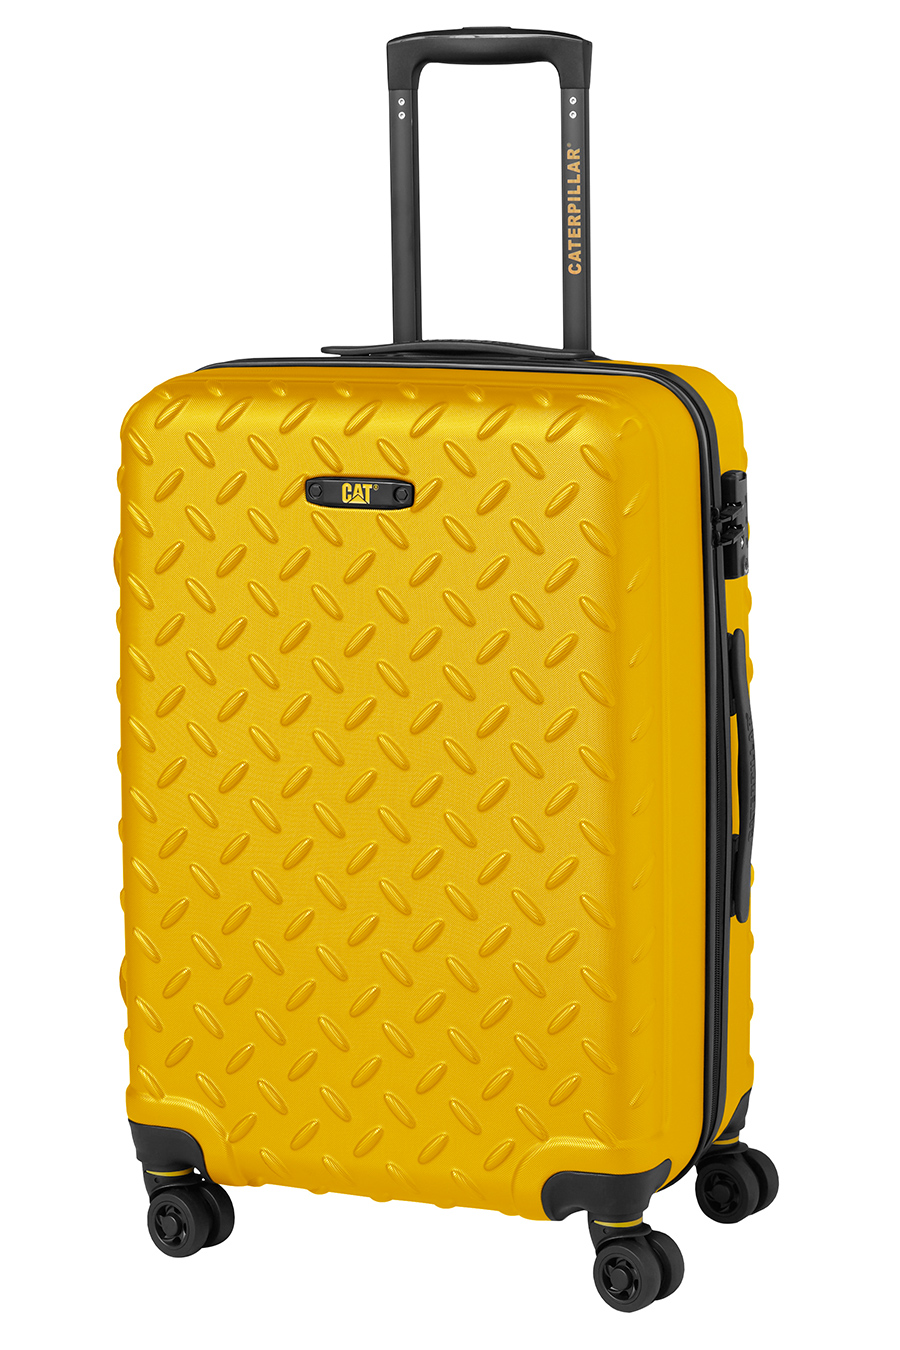 Travel suitcase CAT, large 83686-217